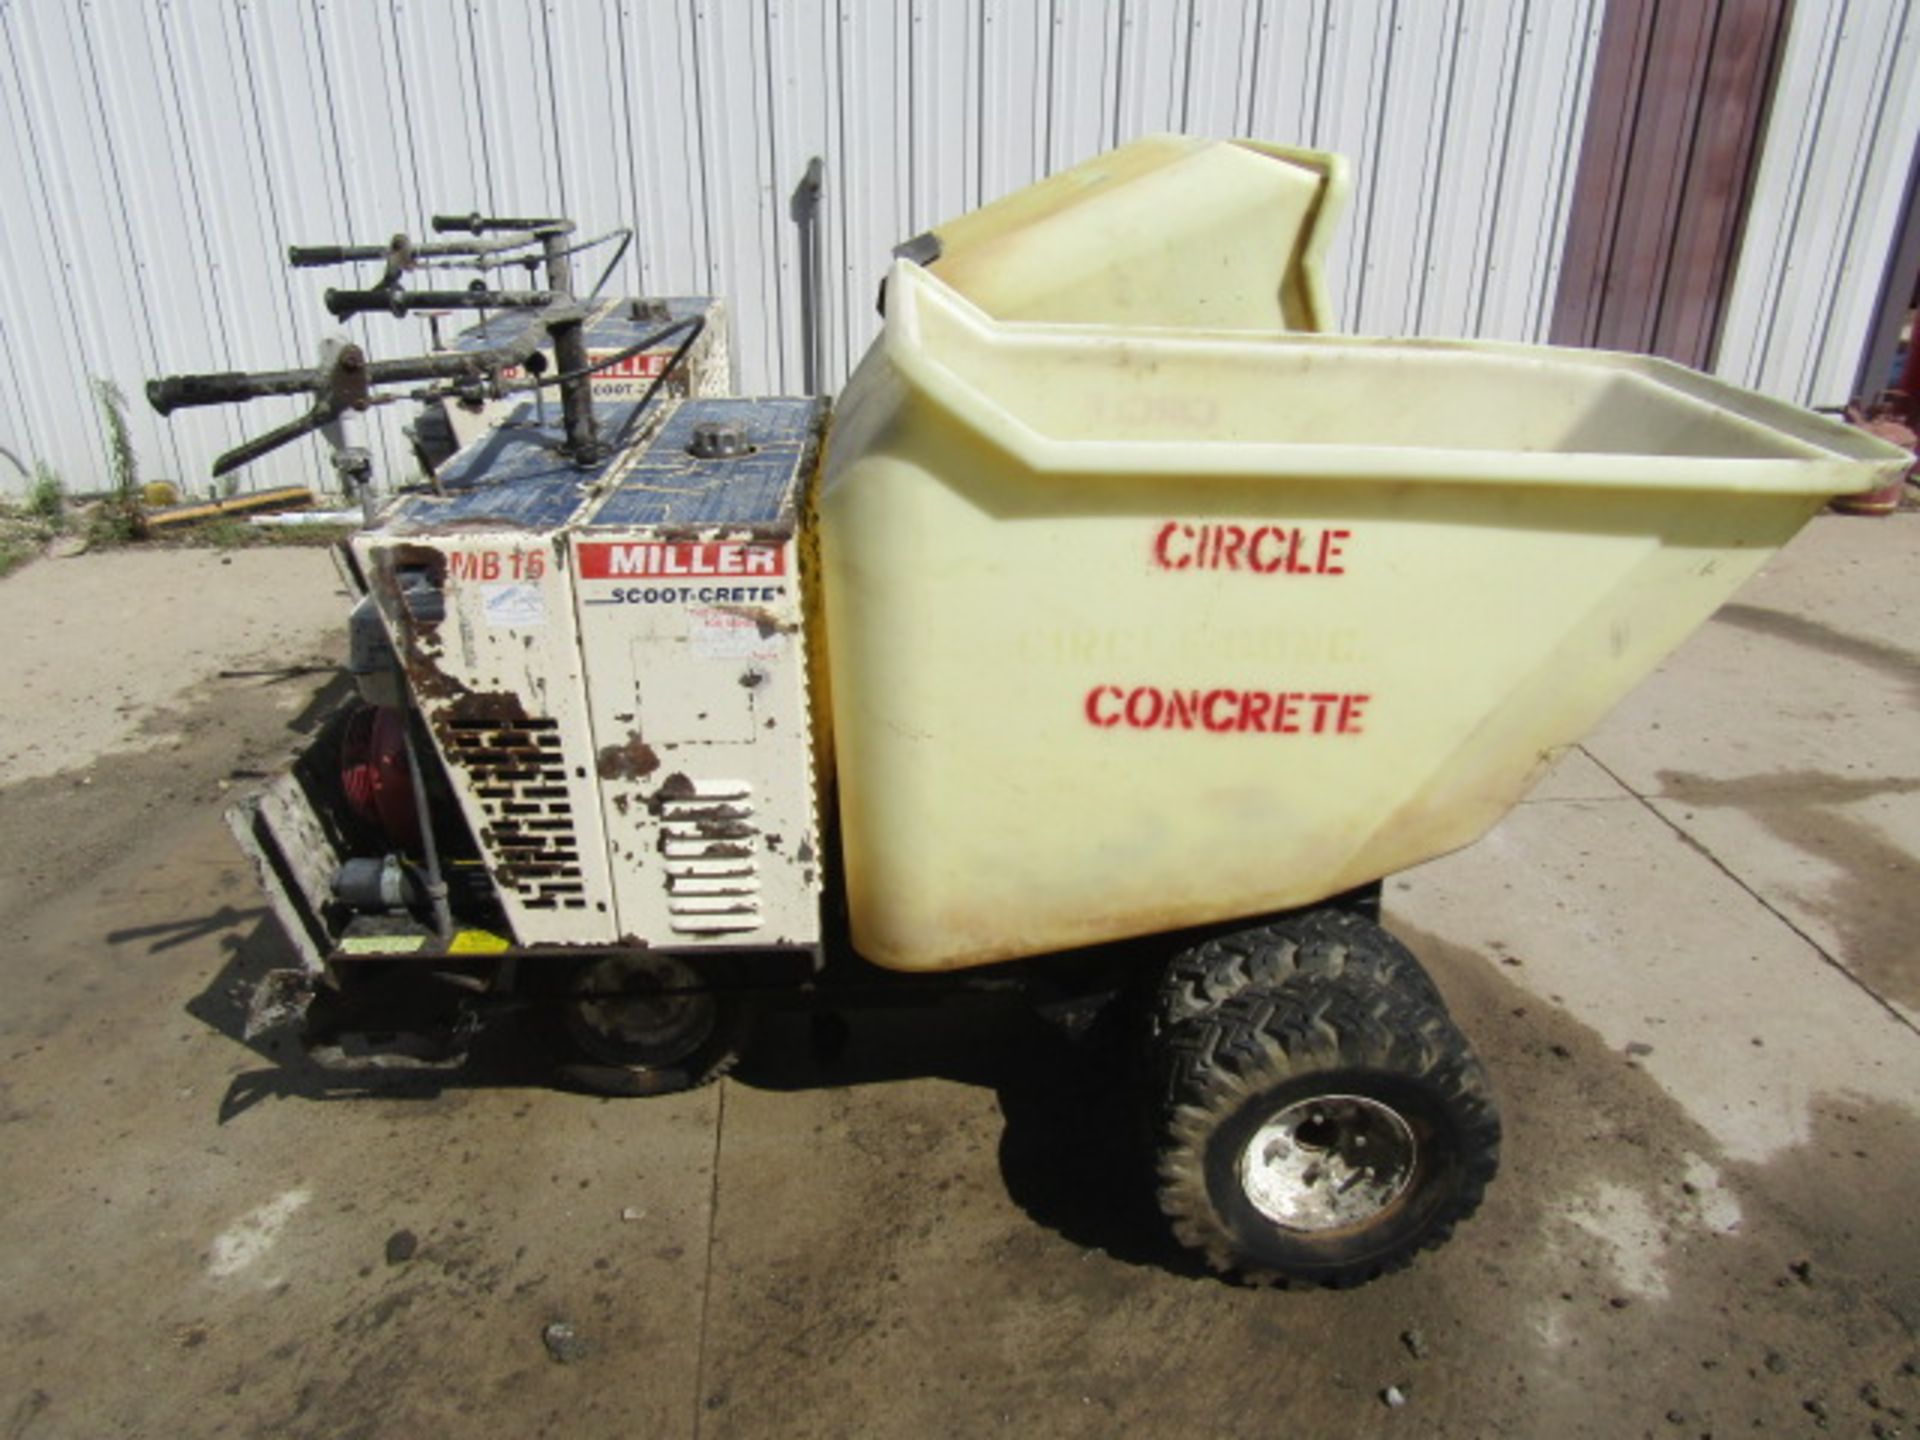 Miller Scoot-Crete Concrete Buggy, Model MB 16/21, GX390 Honda 13 hp Motor,,